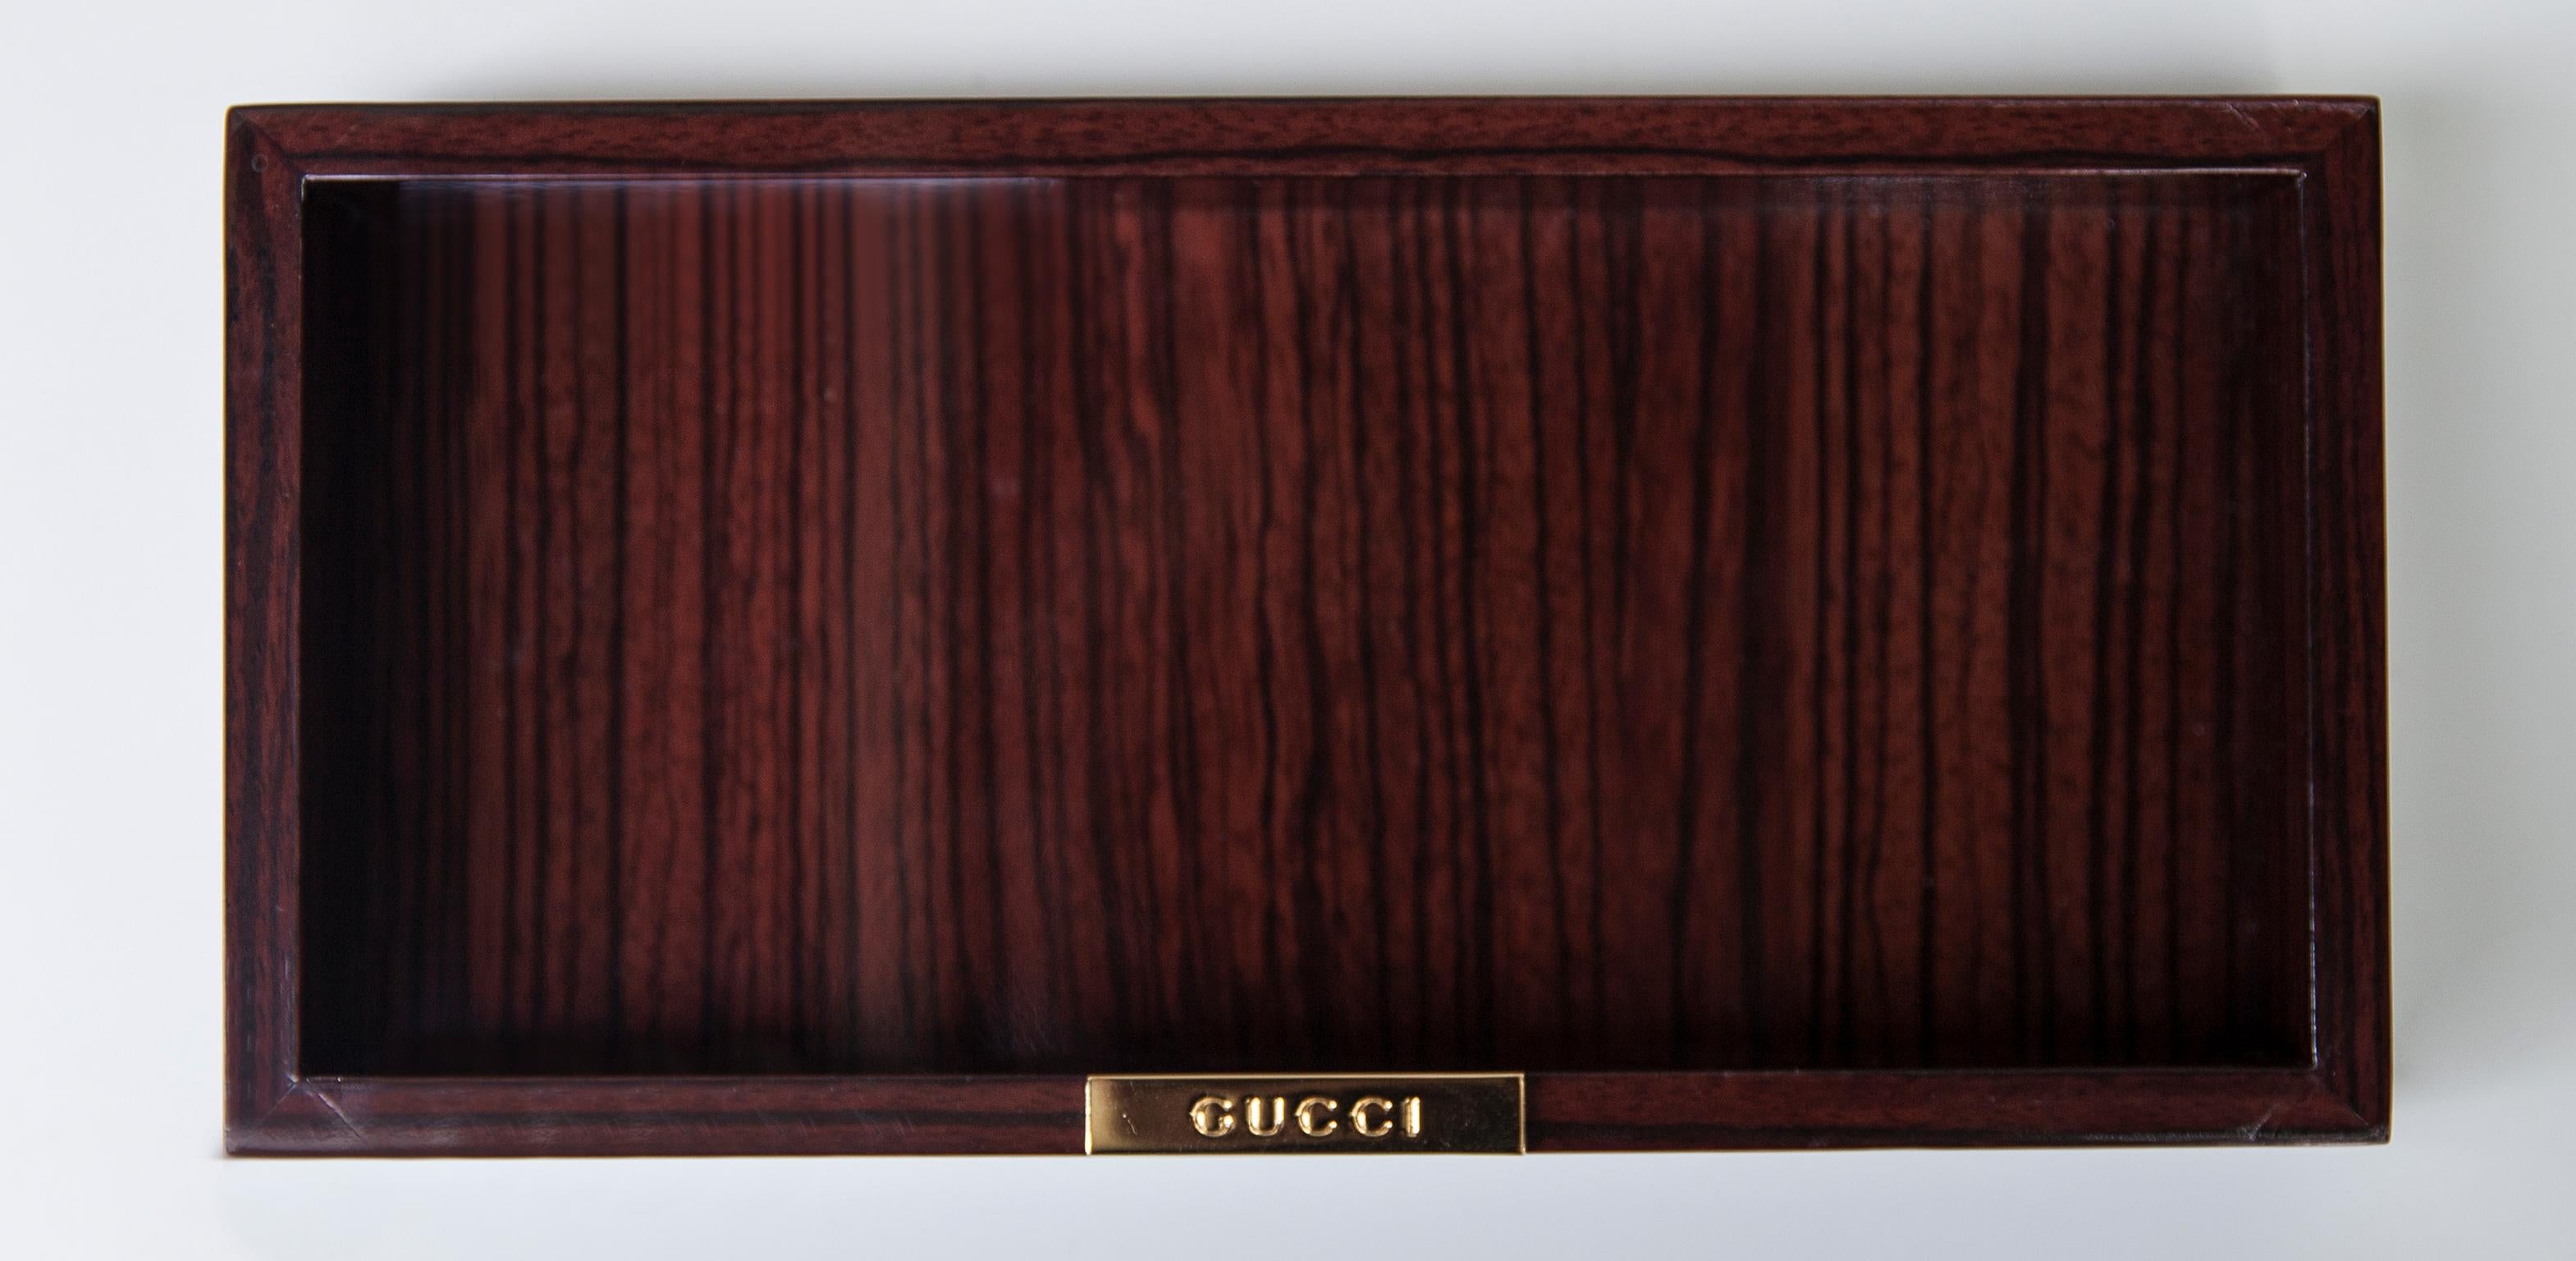 Elegant Gucci bowl in ebony and golden Gucci sign.